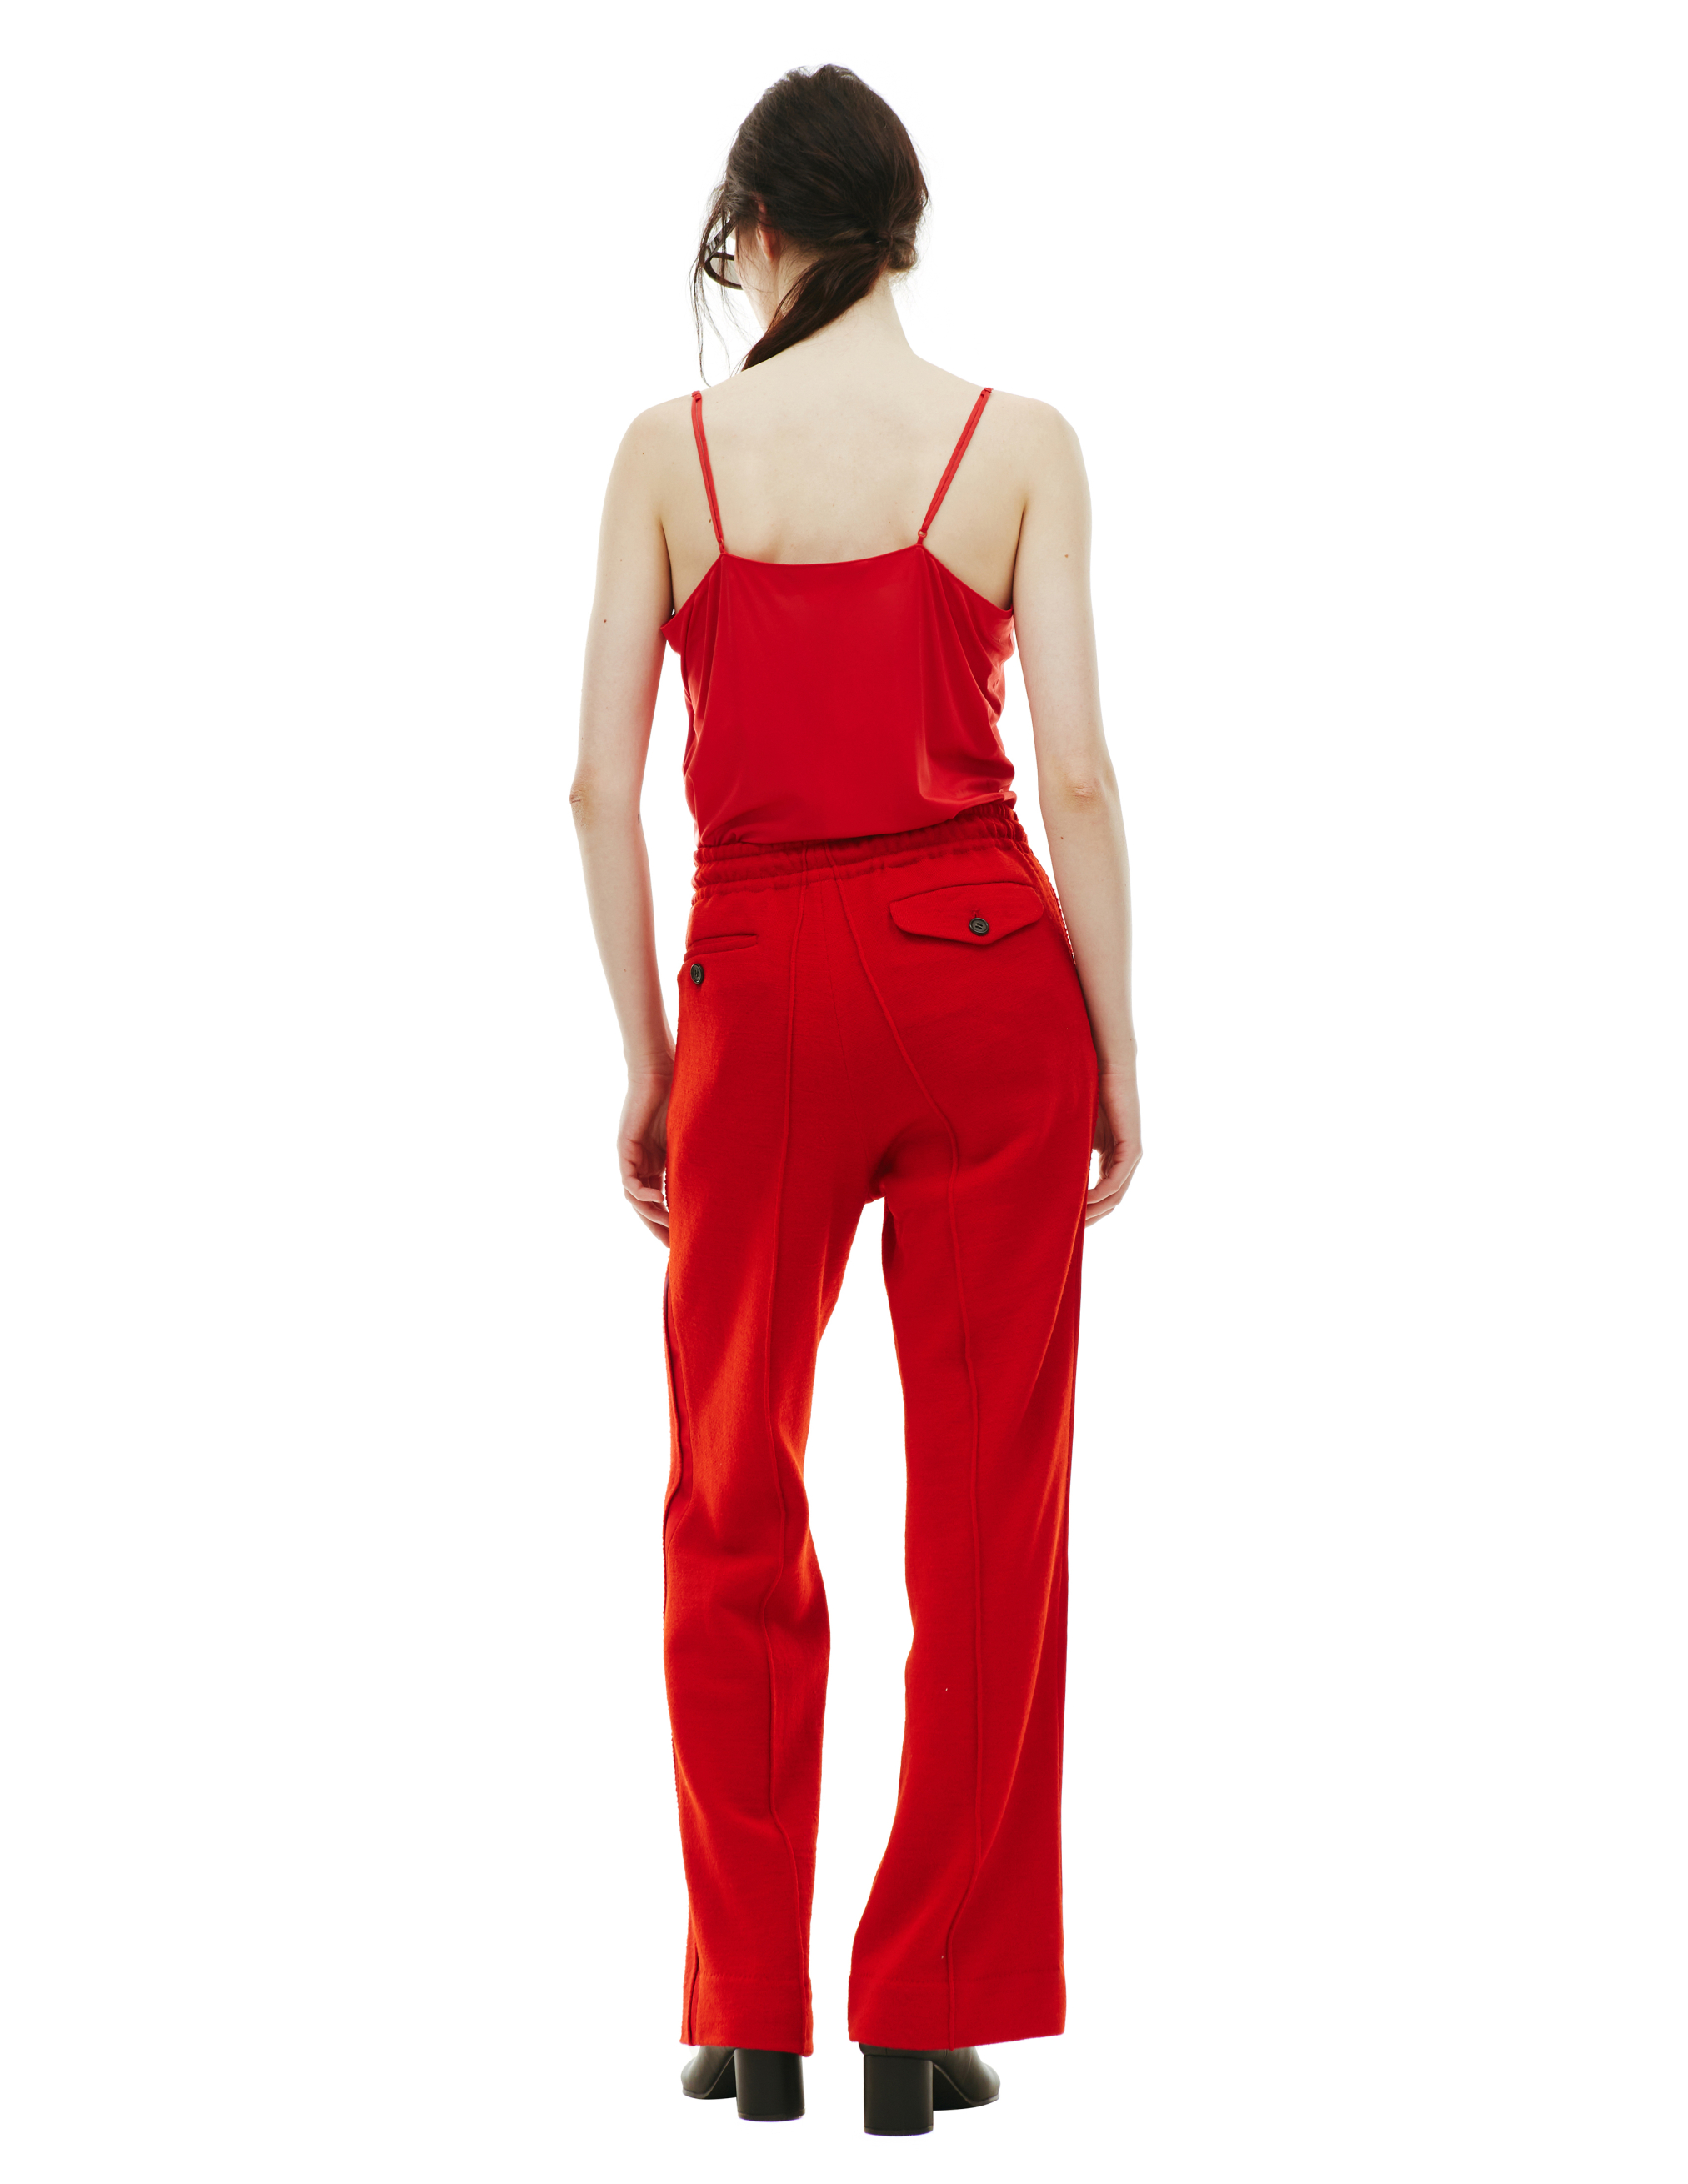 Красные шерстяные брюки Undercover UCX1503/red, размер 3;2 UCX1503/red - фото 3